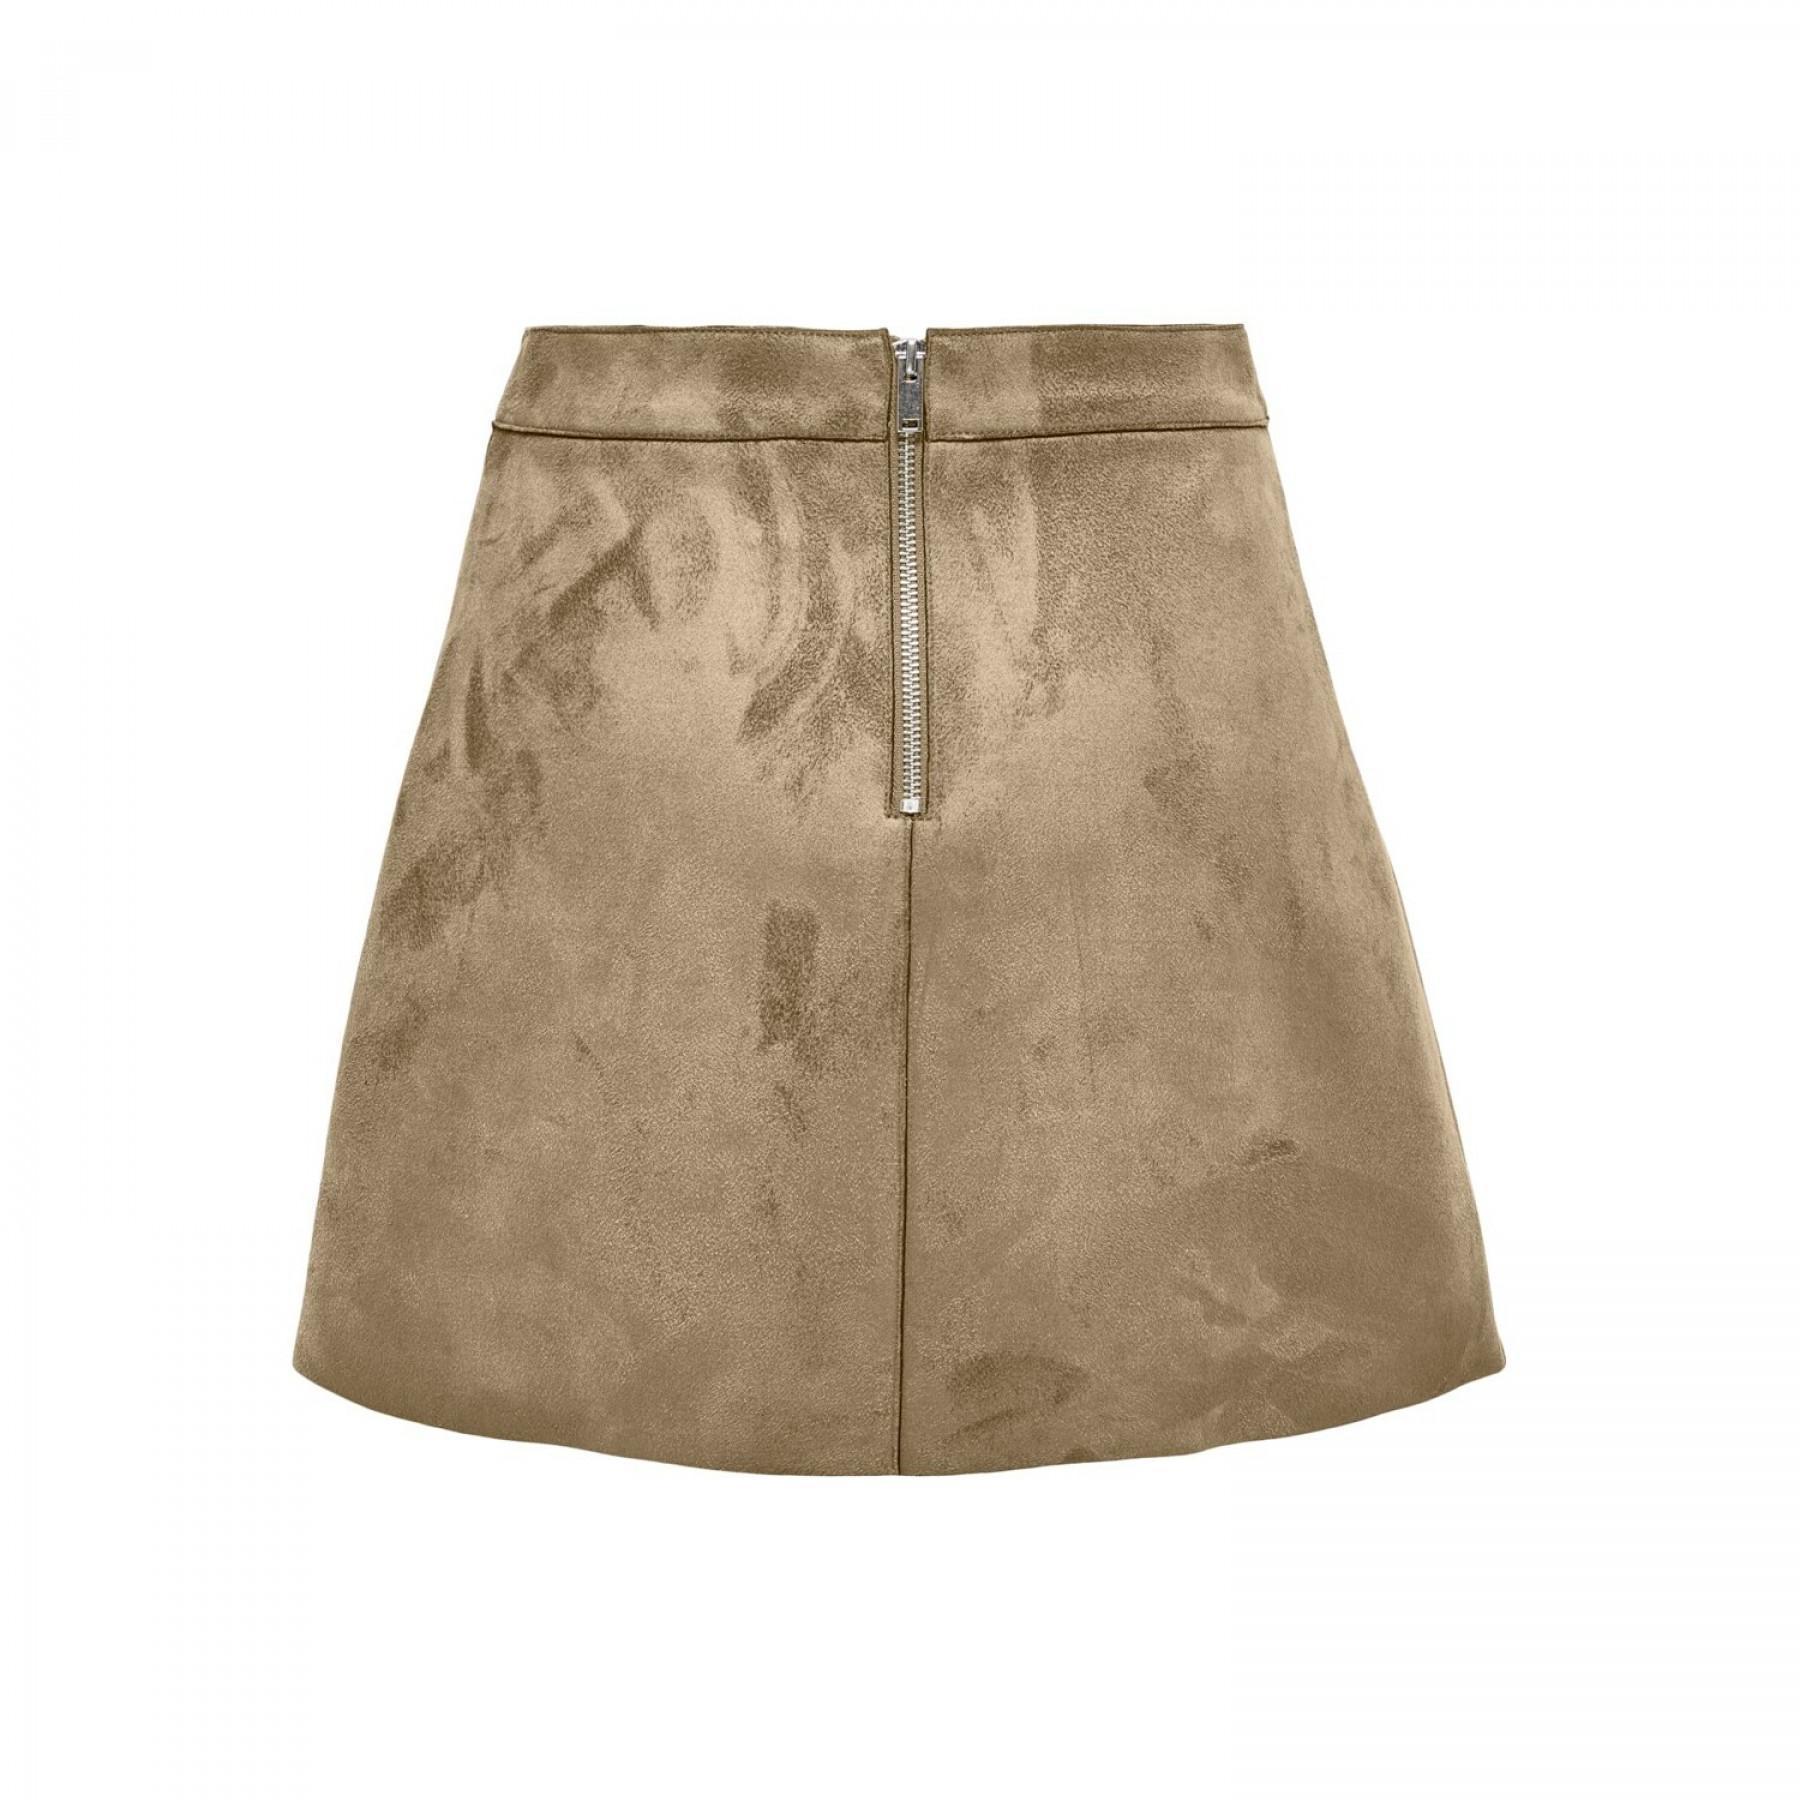 Women's skirt Only onllinea